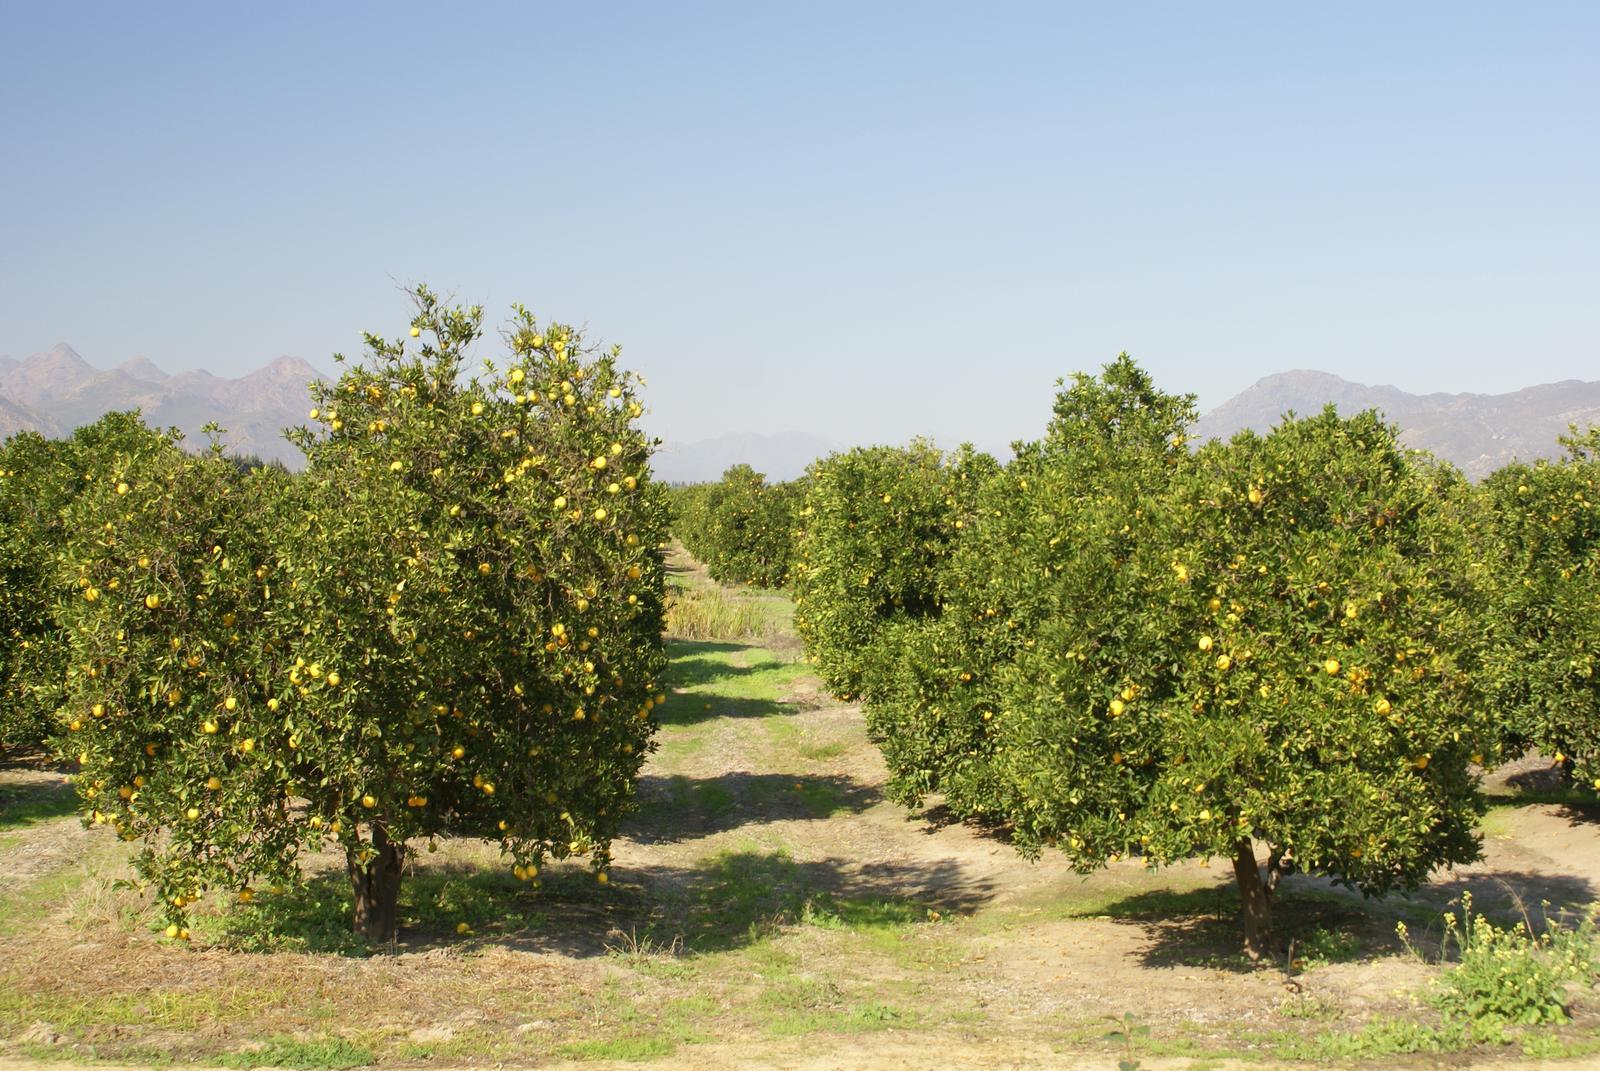 EU Requires Cold Treatment for Citrus Imports